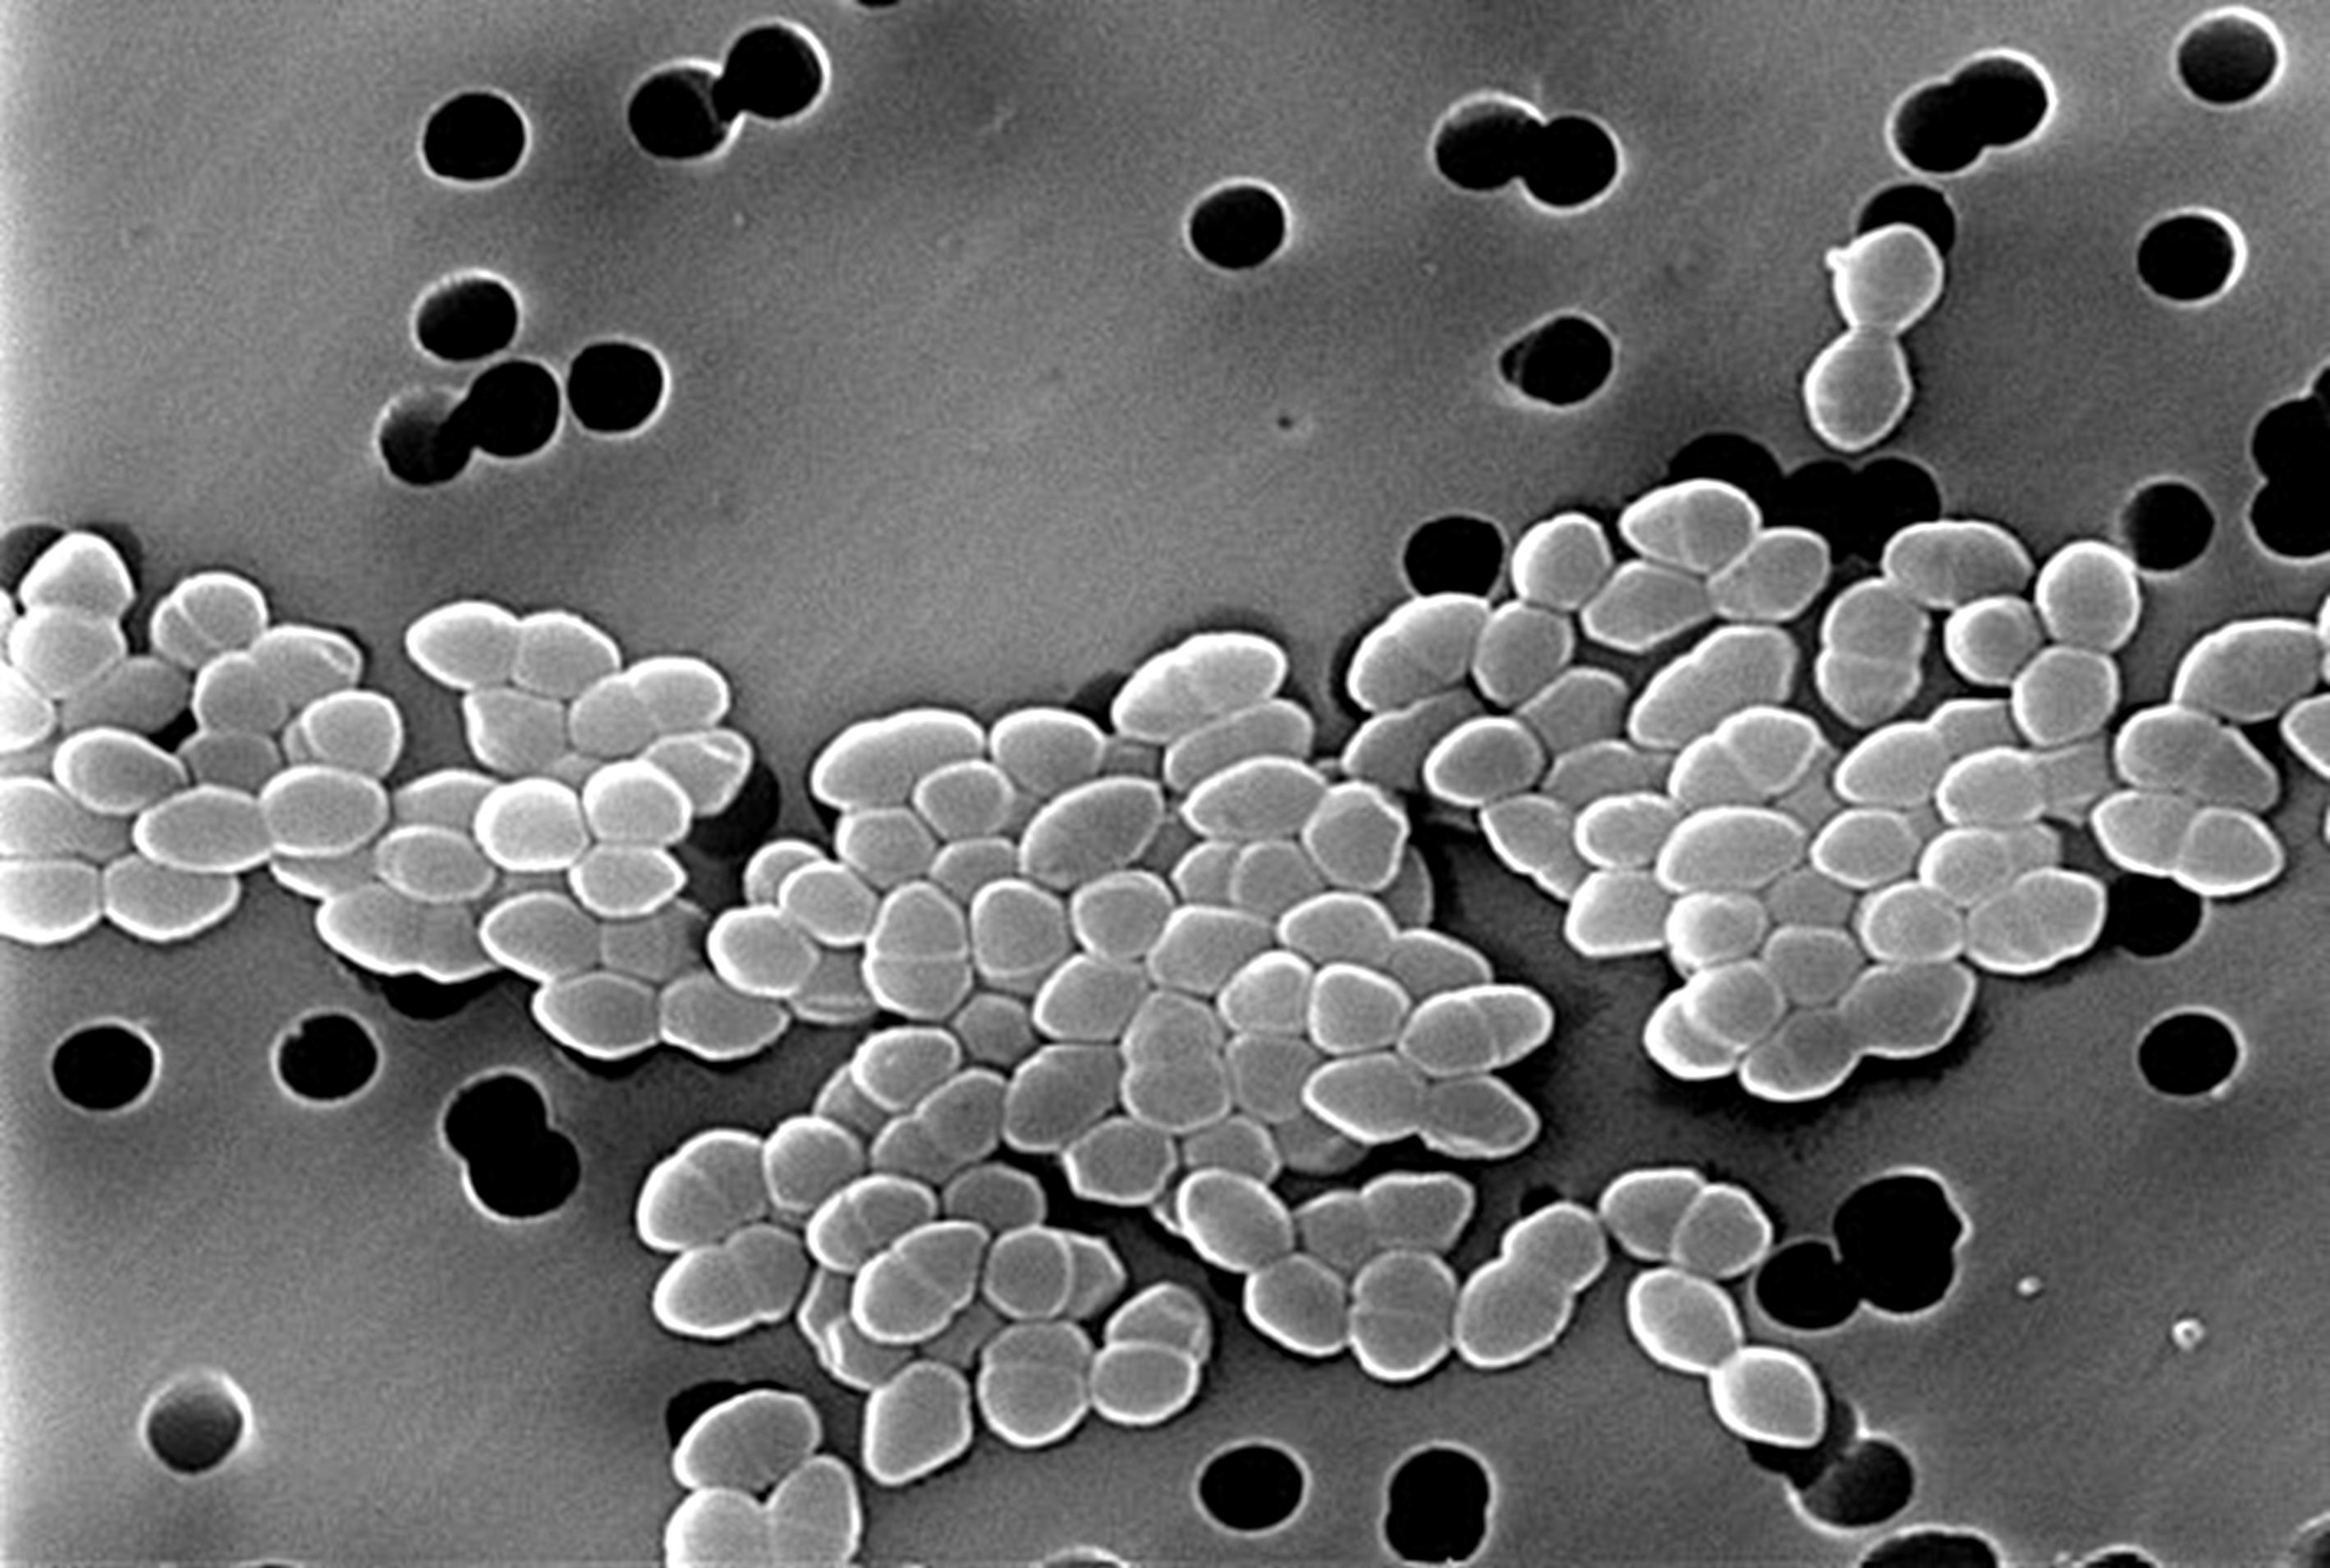 vancomycin resistant enterococcus